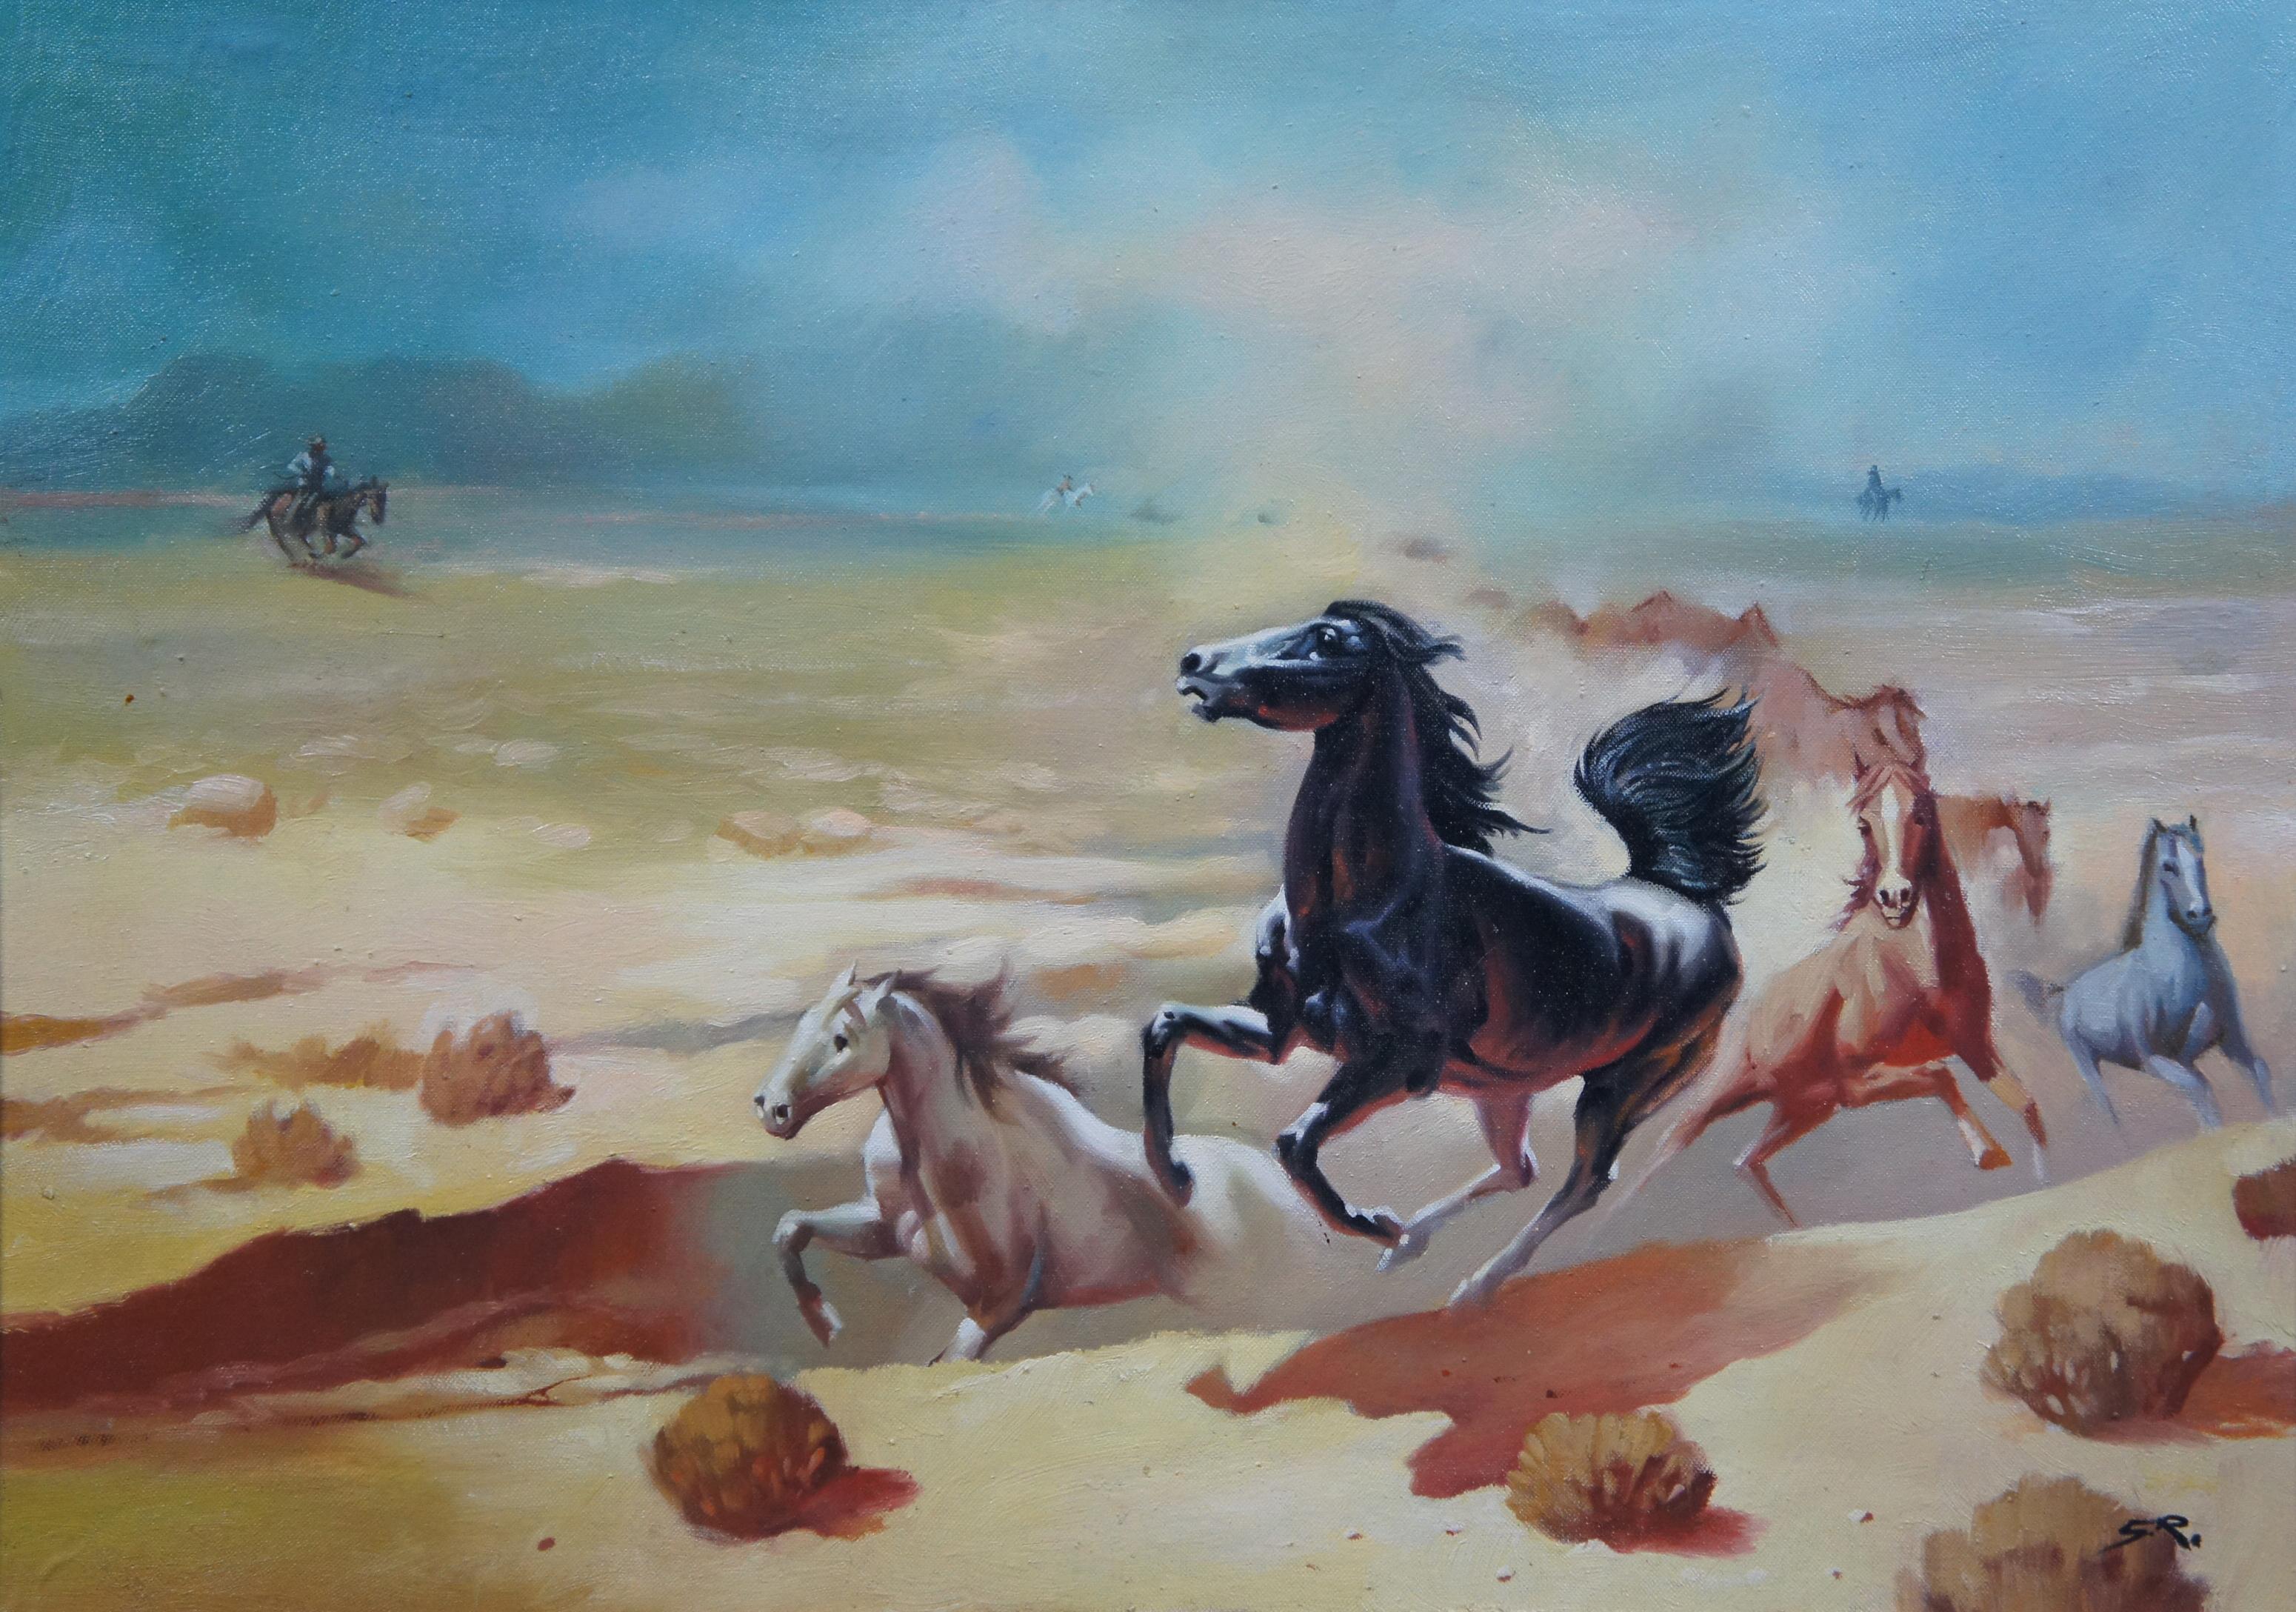 Rustic Original Oil Painting on Canvas Running Wild Horses Desert Landscape Western